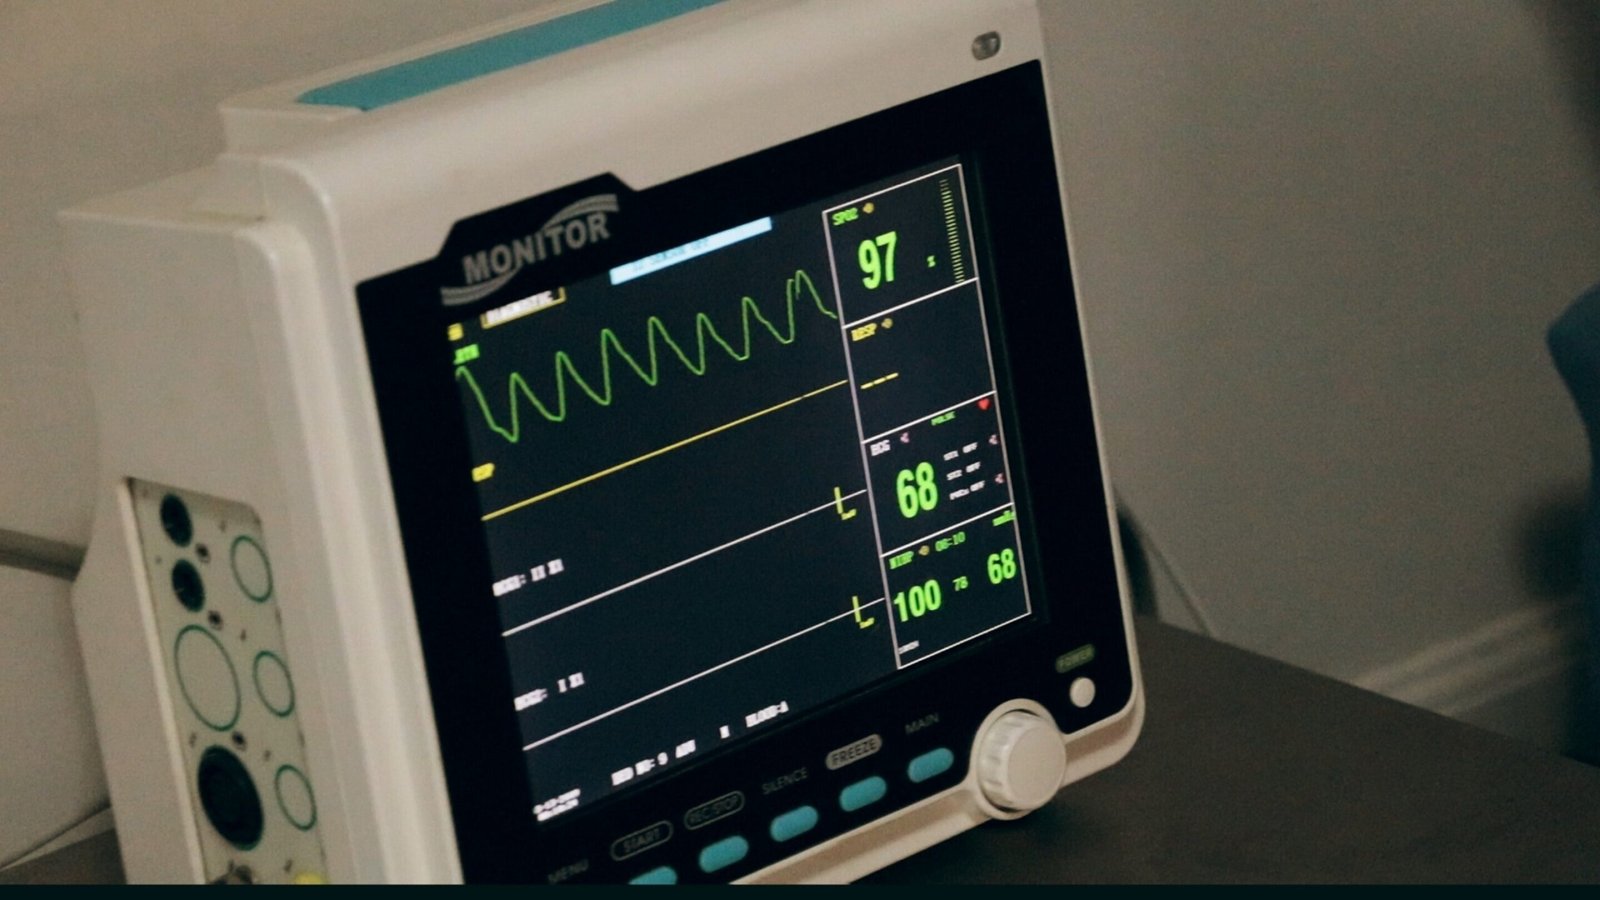 Vigilant monitoring is needed to manage cardiac risks in patients using antipsychotics, doctors say